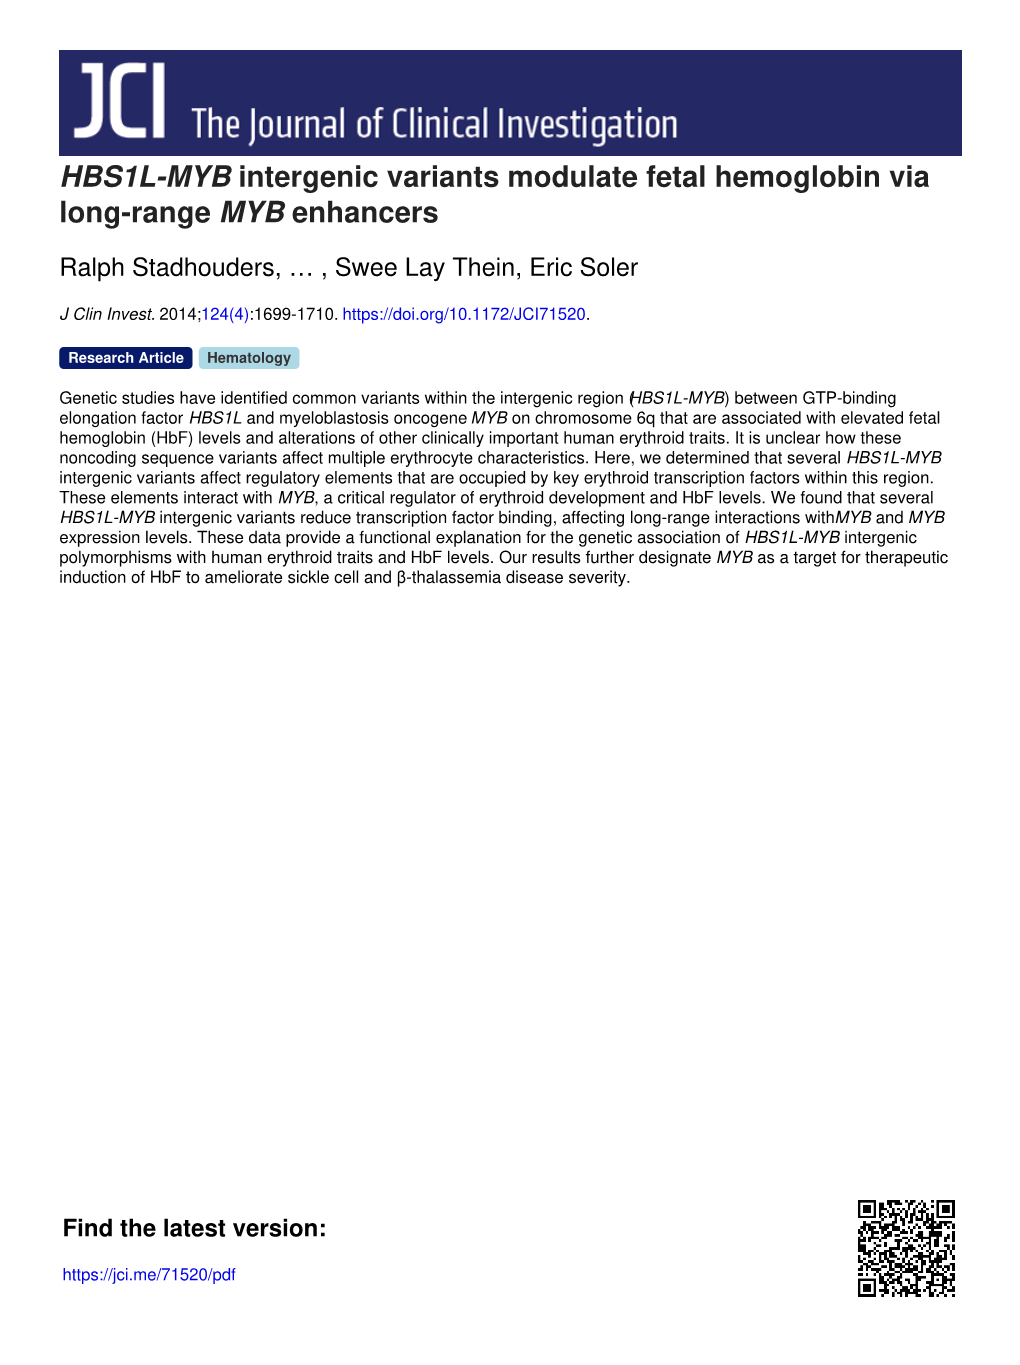 HBS1L-MYB Intergenic Variants Modulate Fetal Hemoglobin Via Long-Range MYB Enhancers